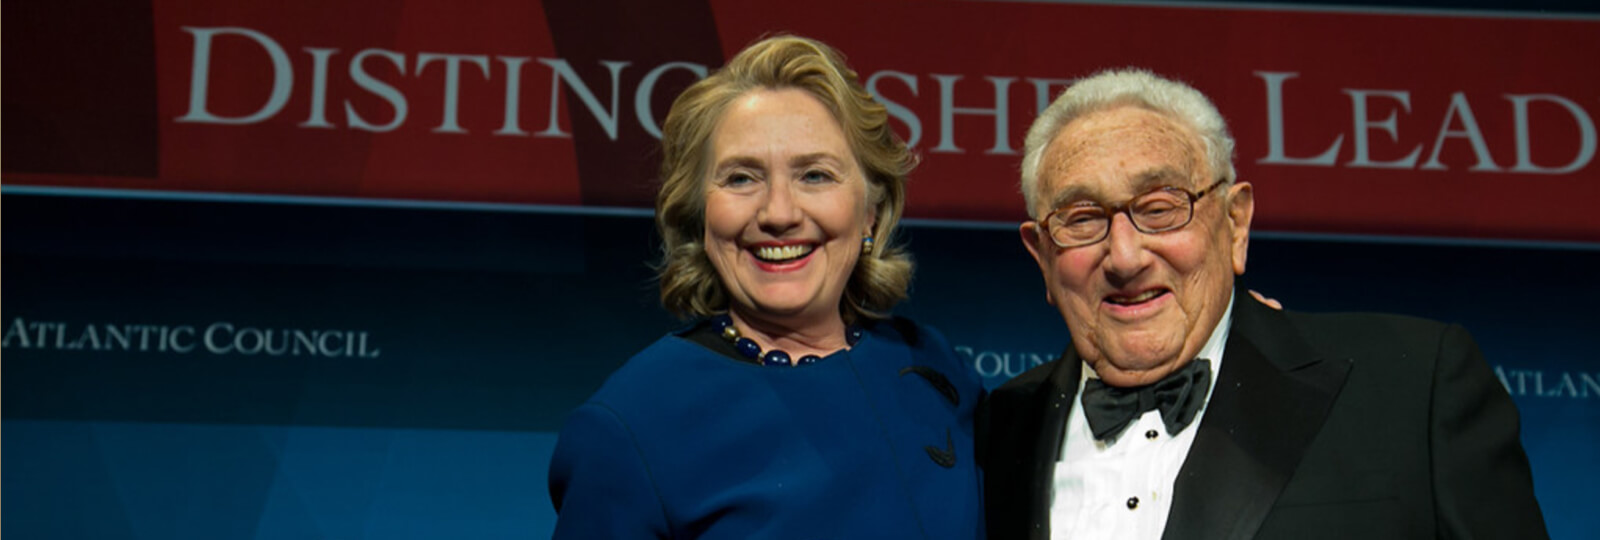 Hillary Clinton stands beside Henry Kissinger